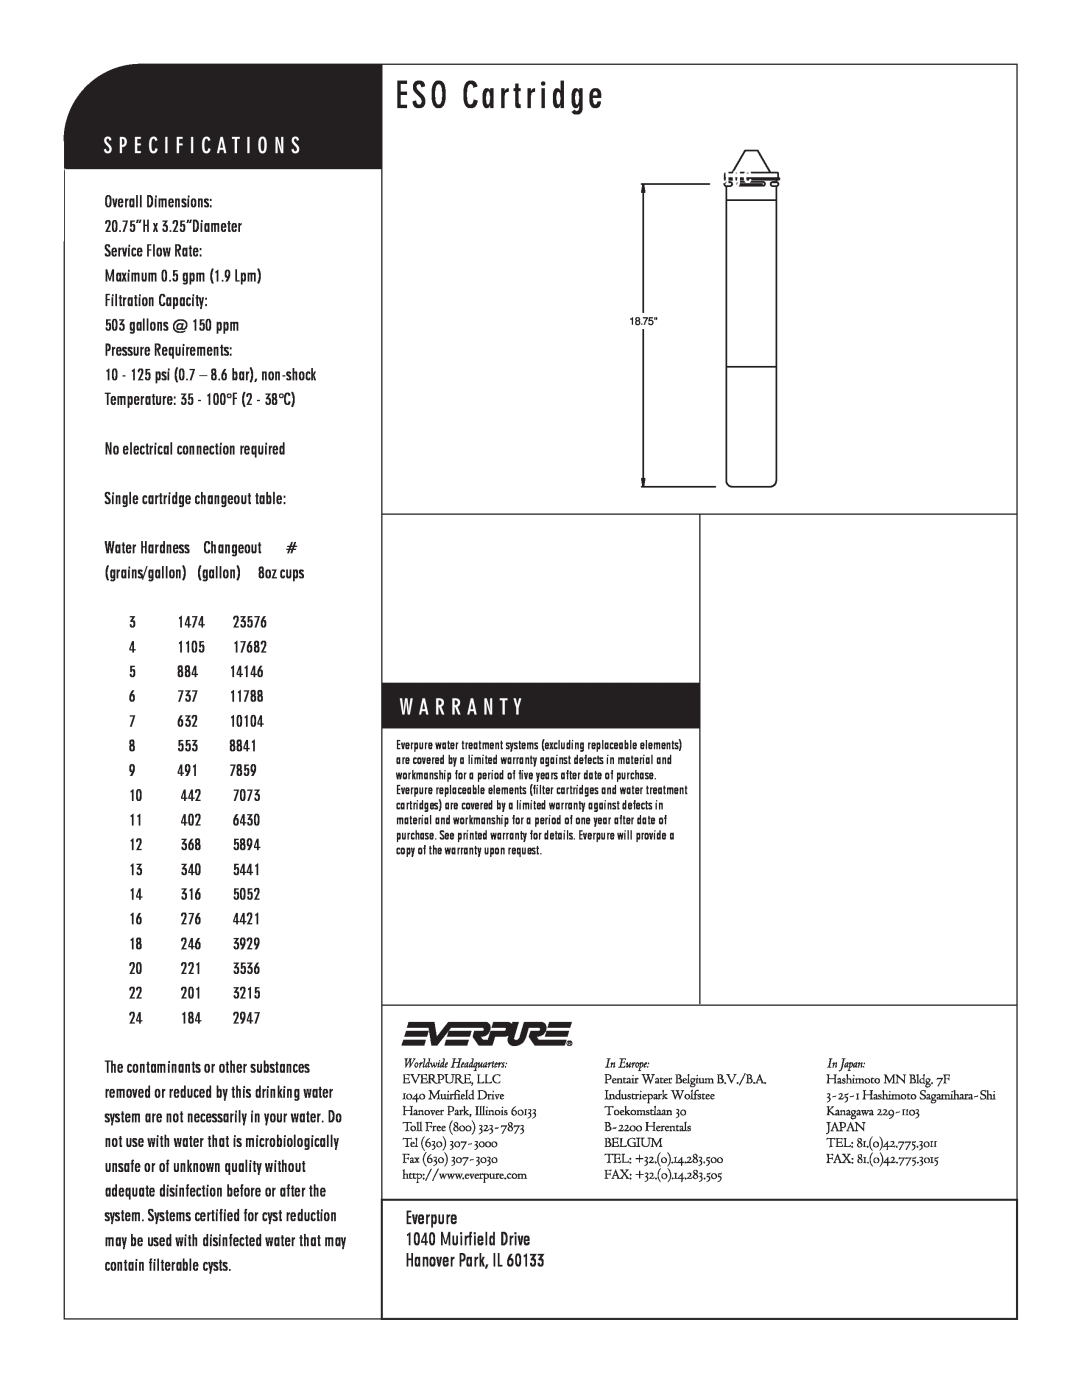 Everpure EV9607-20 manual ESO Cartridge, Specialty Replacement Cartridge, 8841, 7859, gallon 8oz cups 